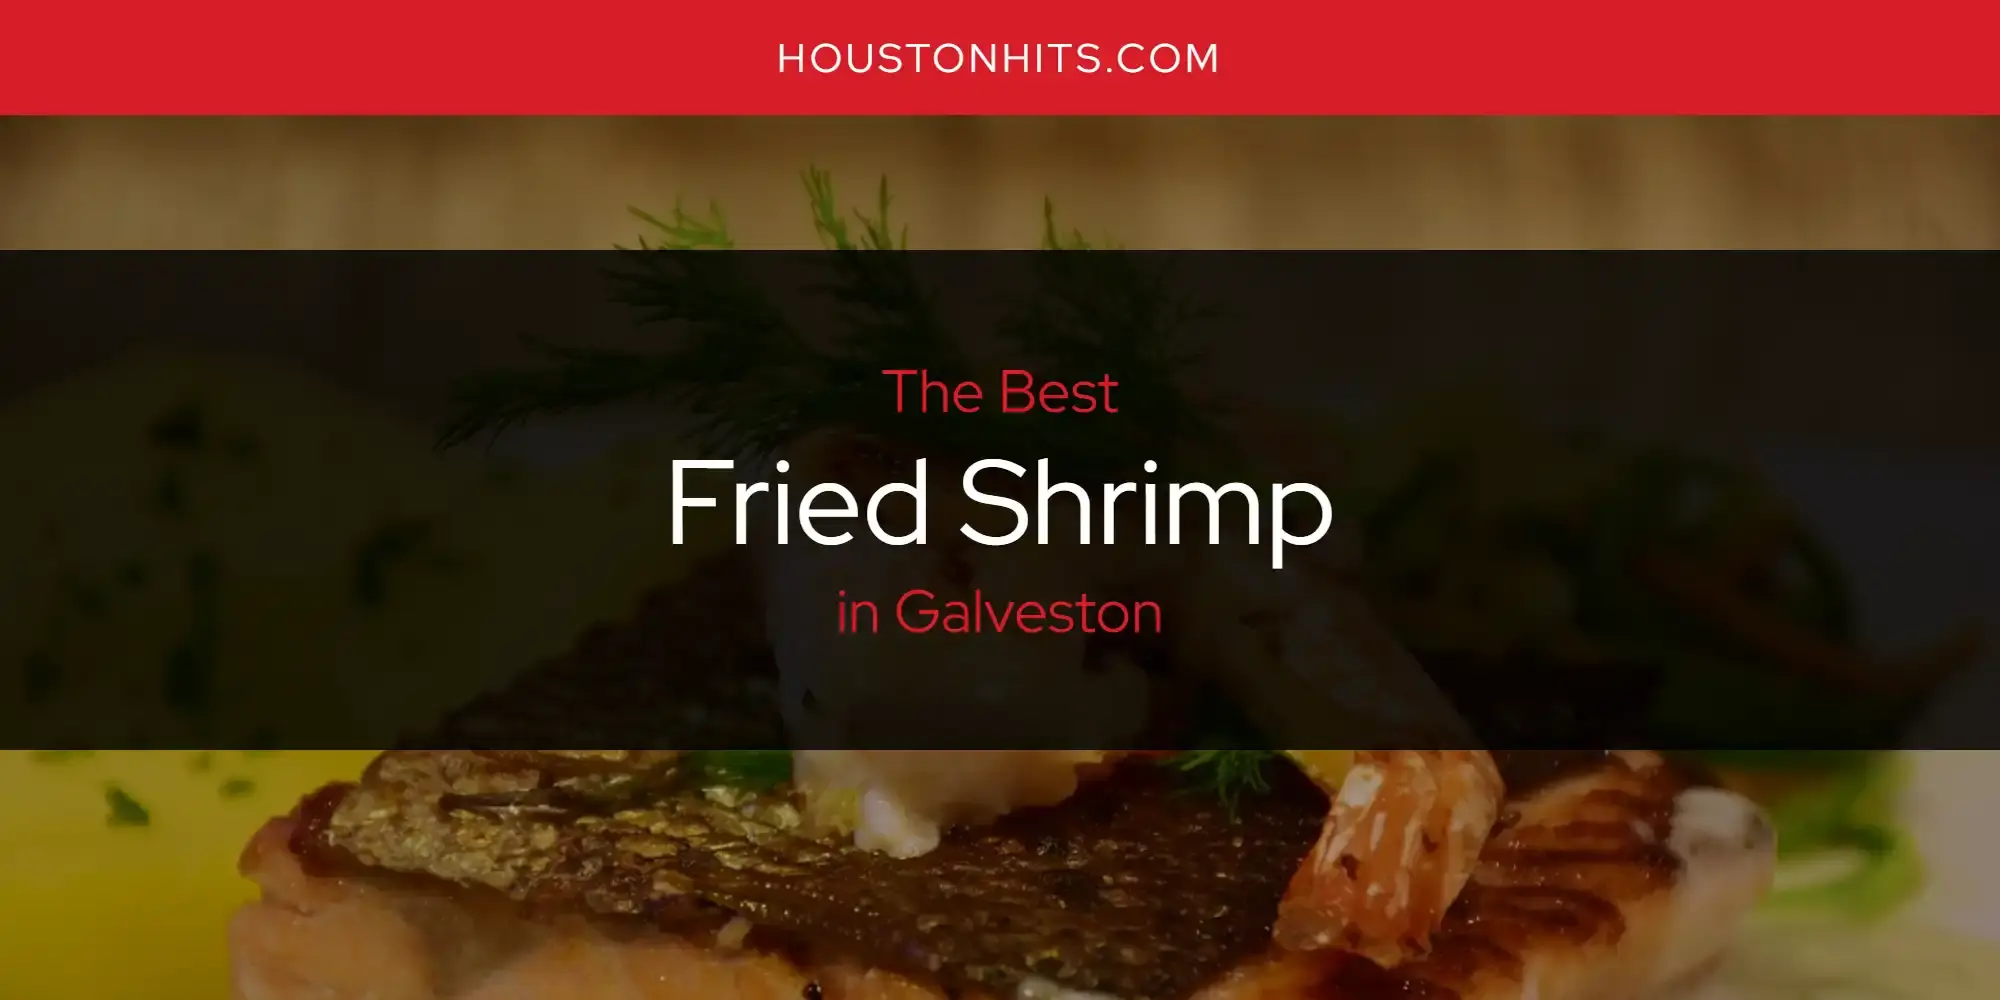 Best Fried Shrimp in Galveston? Here's the Top 17